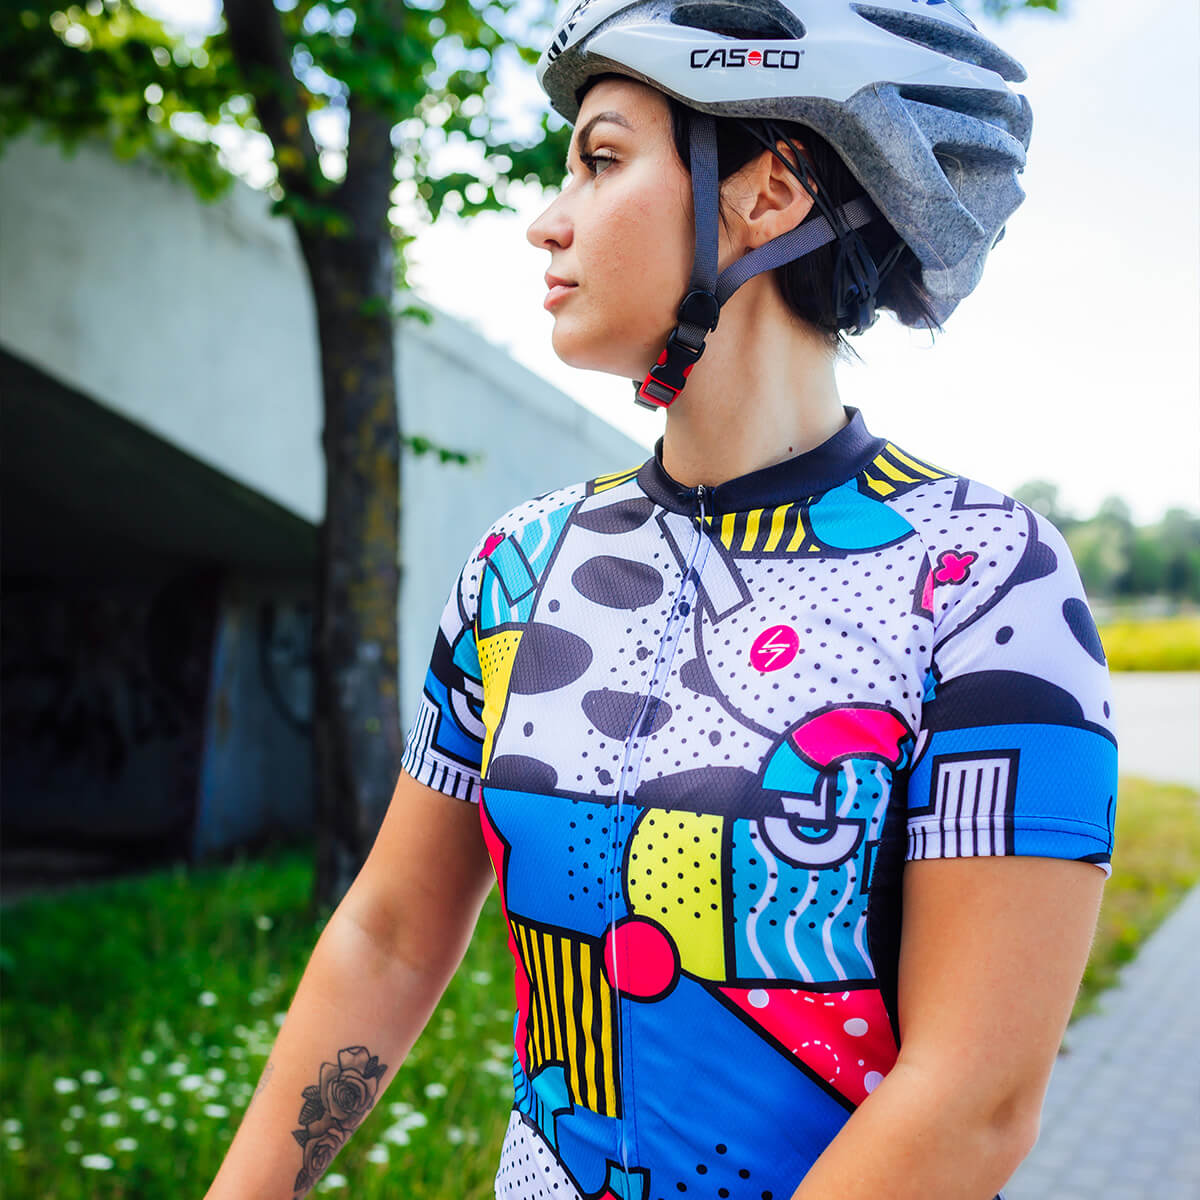 STEEP Women's Cycling Jerseys  Stylish, Comfortable & High-Performance